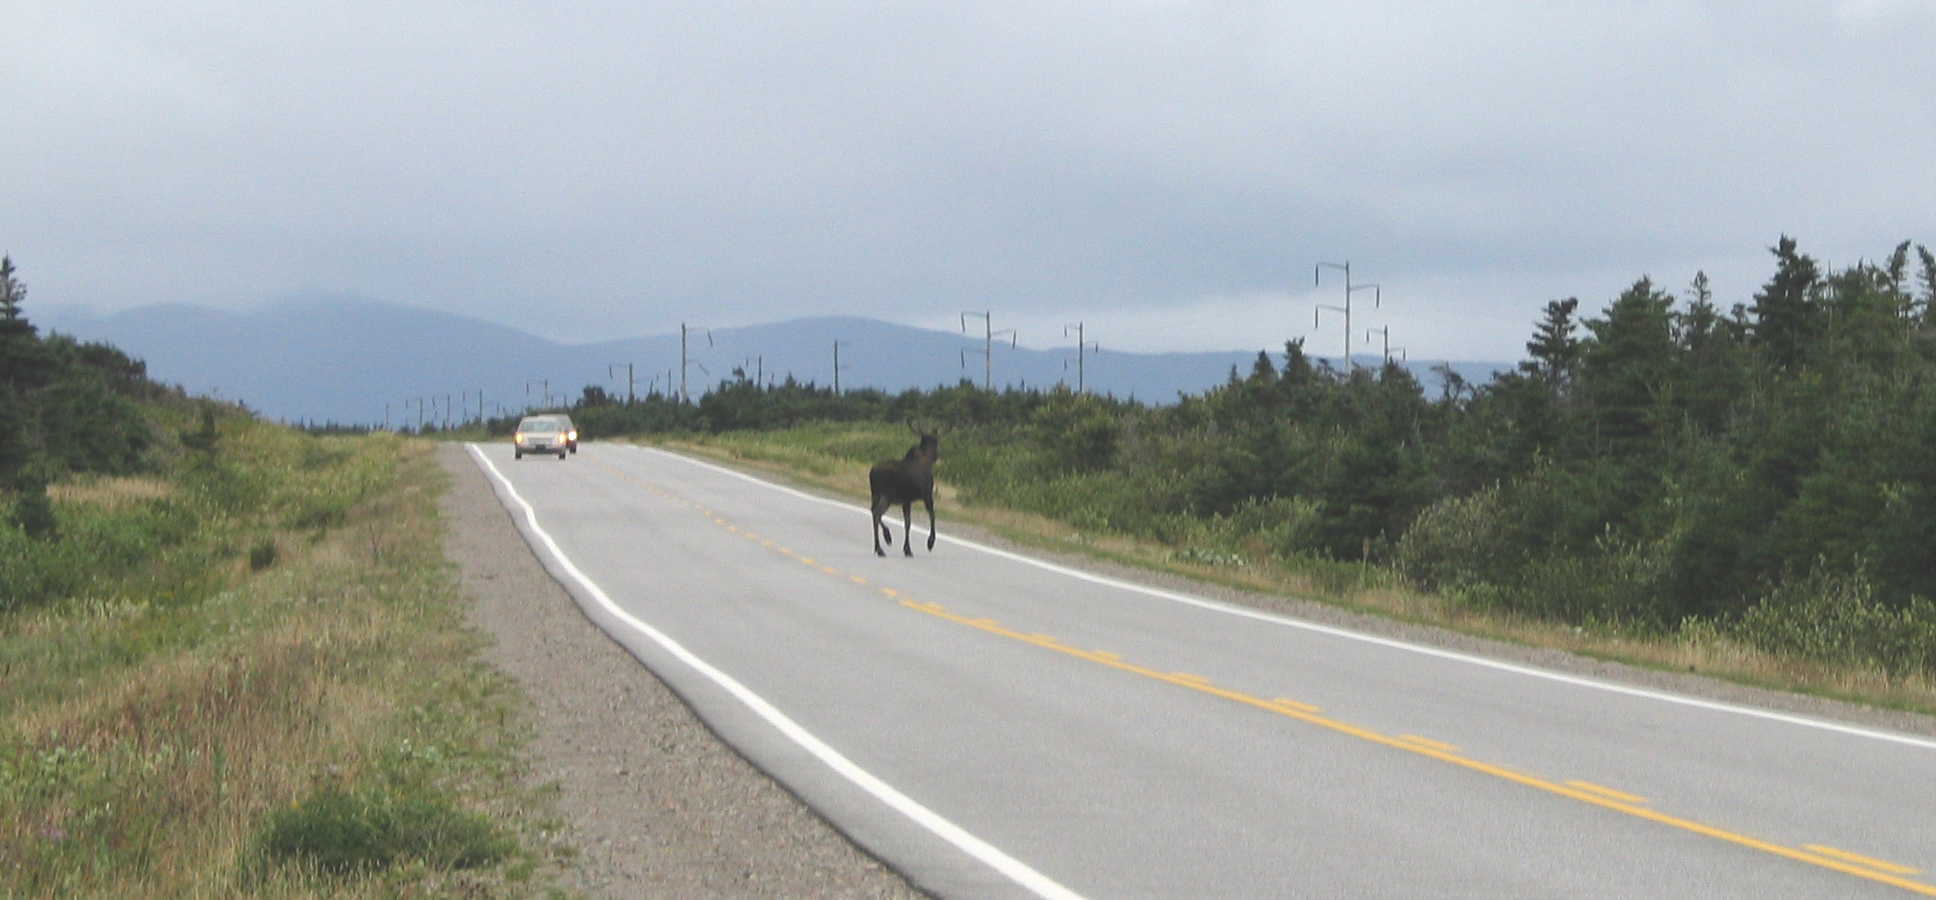 Moose on the highway, Newfoundland. Photo by Ulli Diemer.